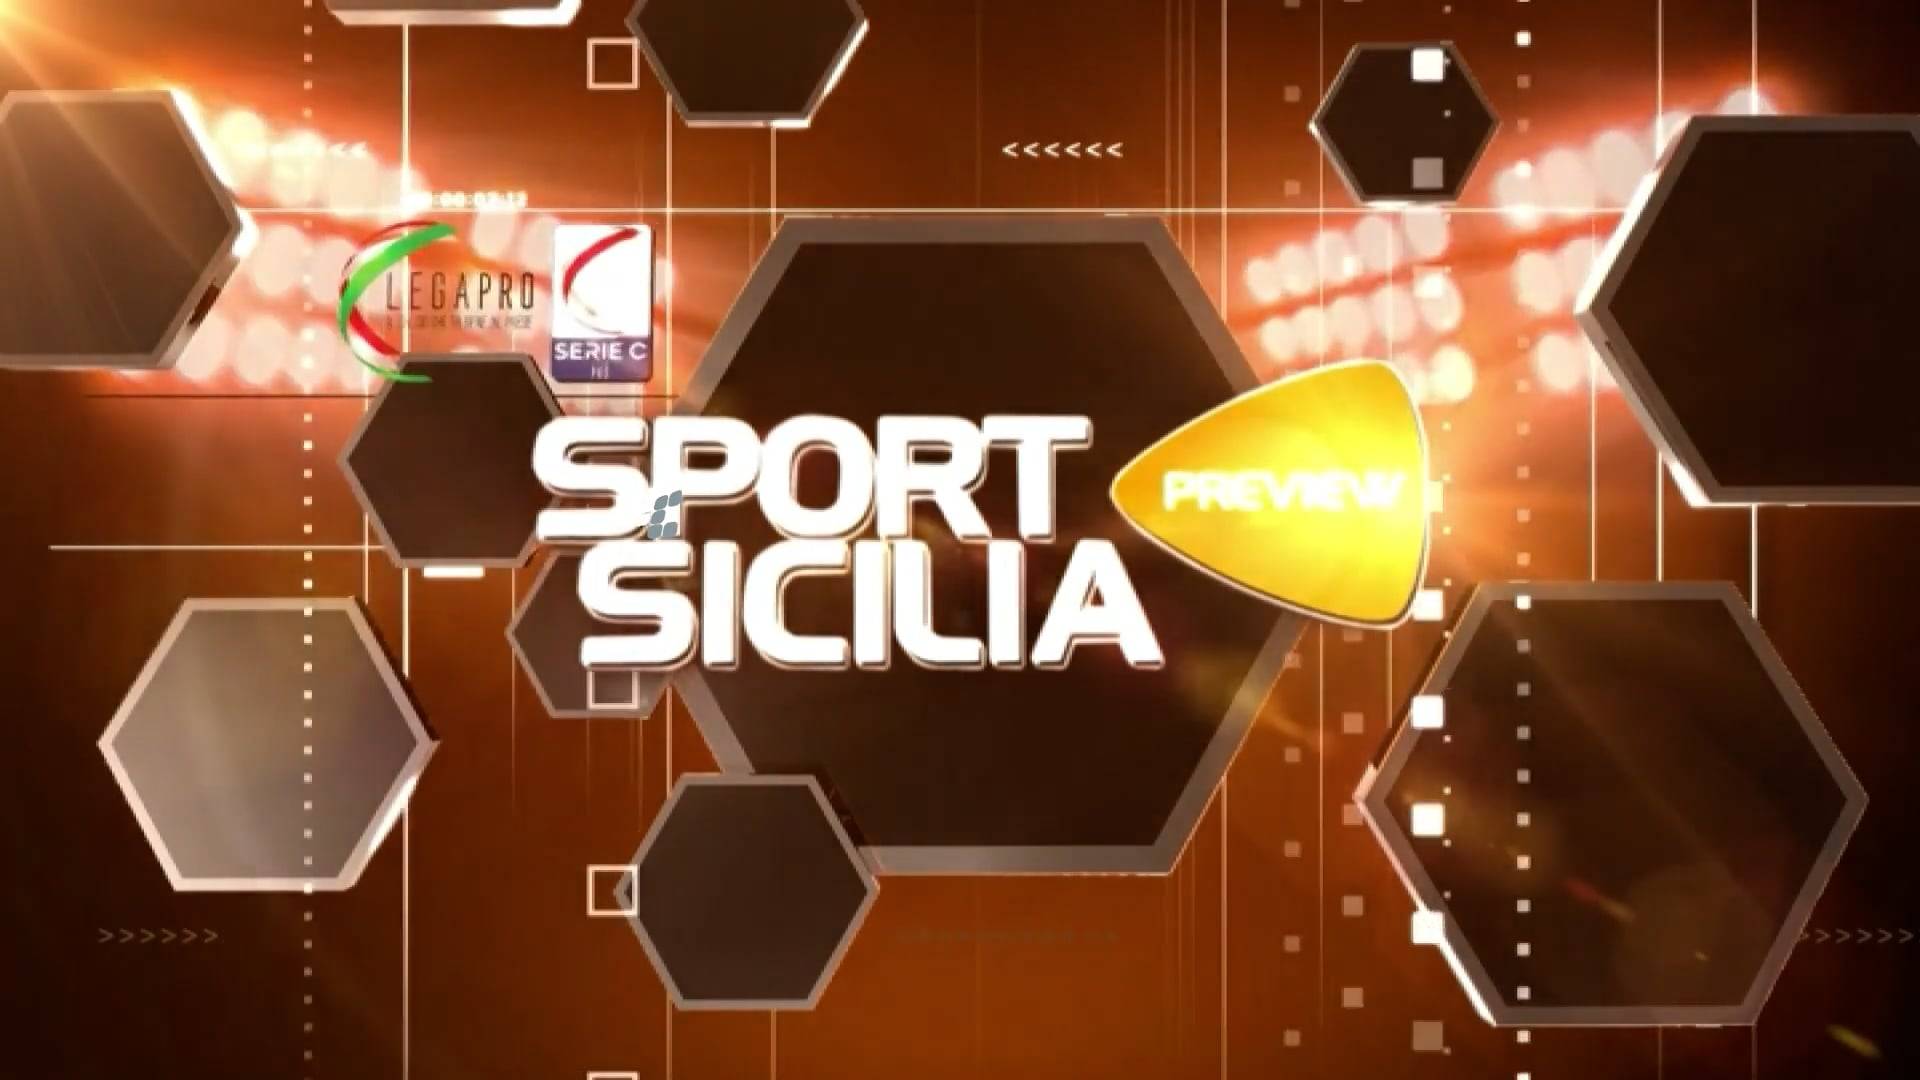 sport-sicilia-preview-30-gennaio-2022-vimeo-thumbnail.jpg